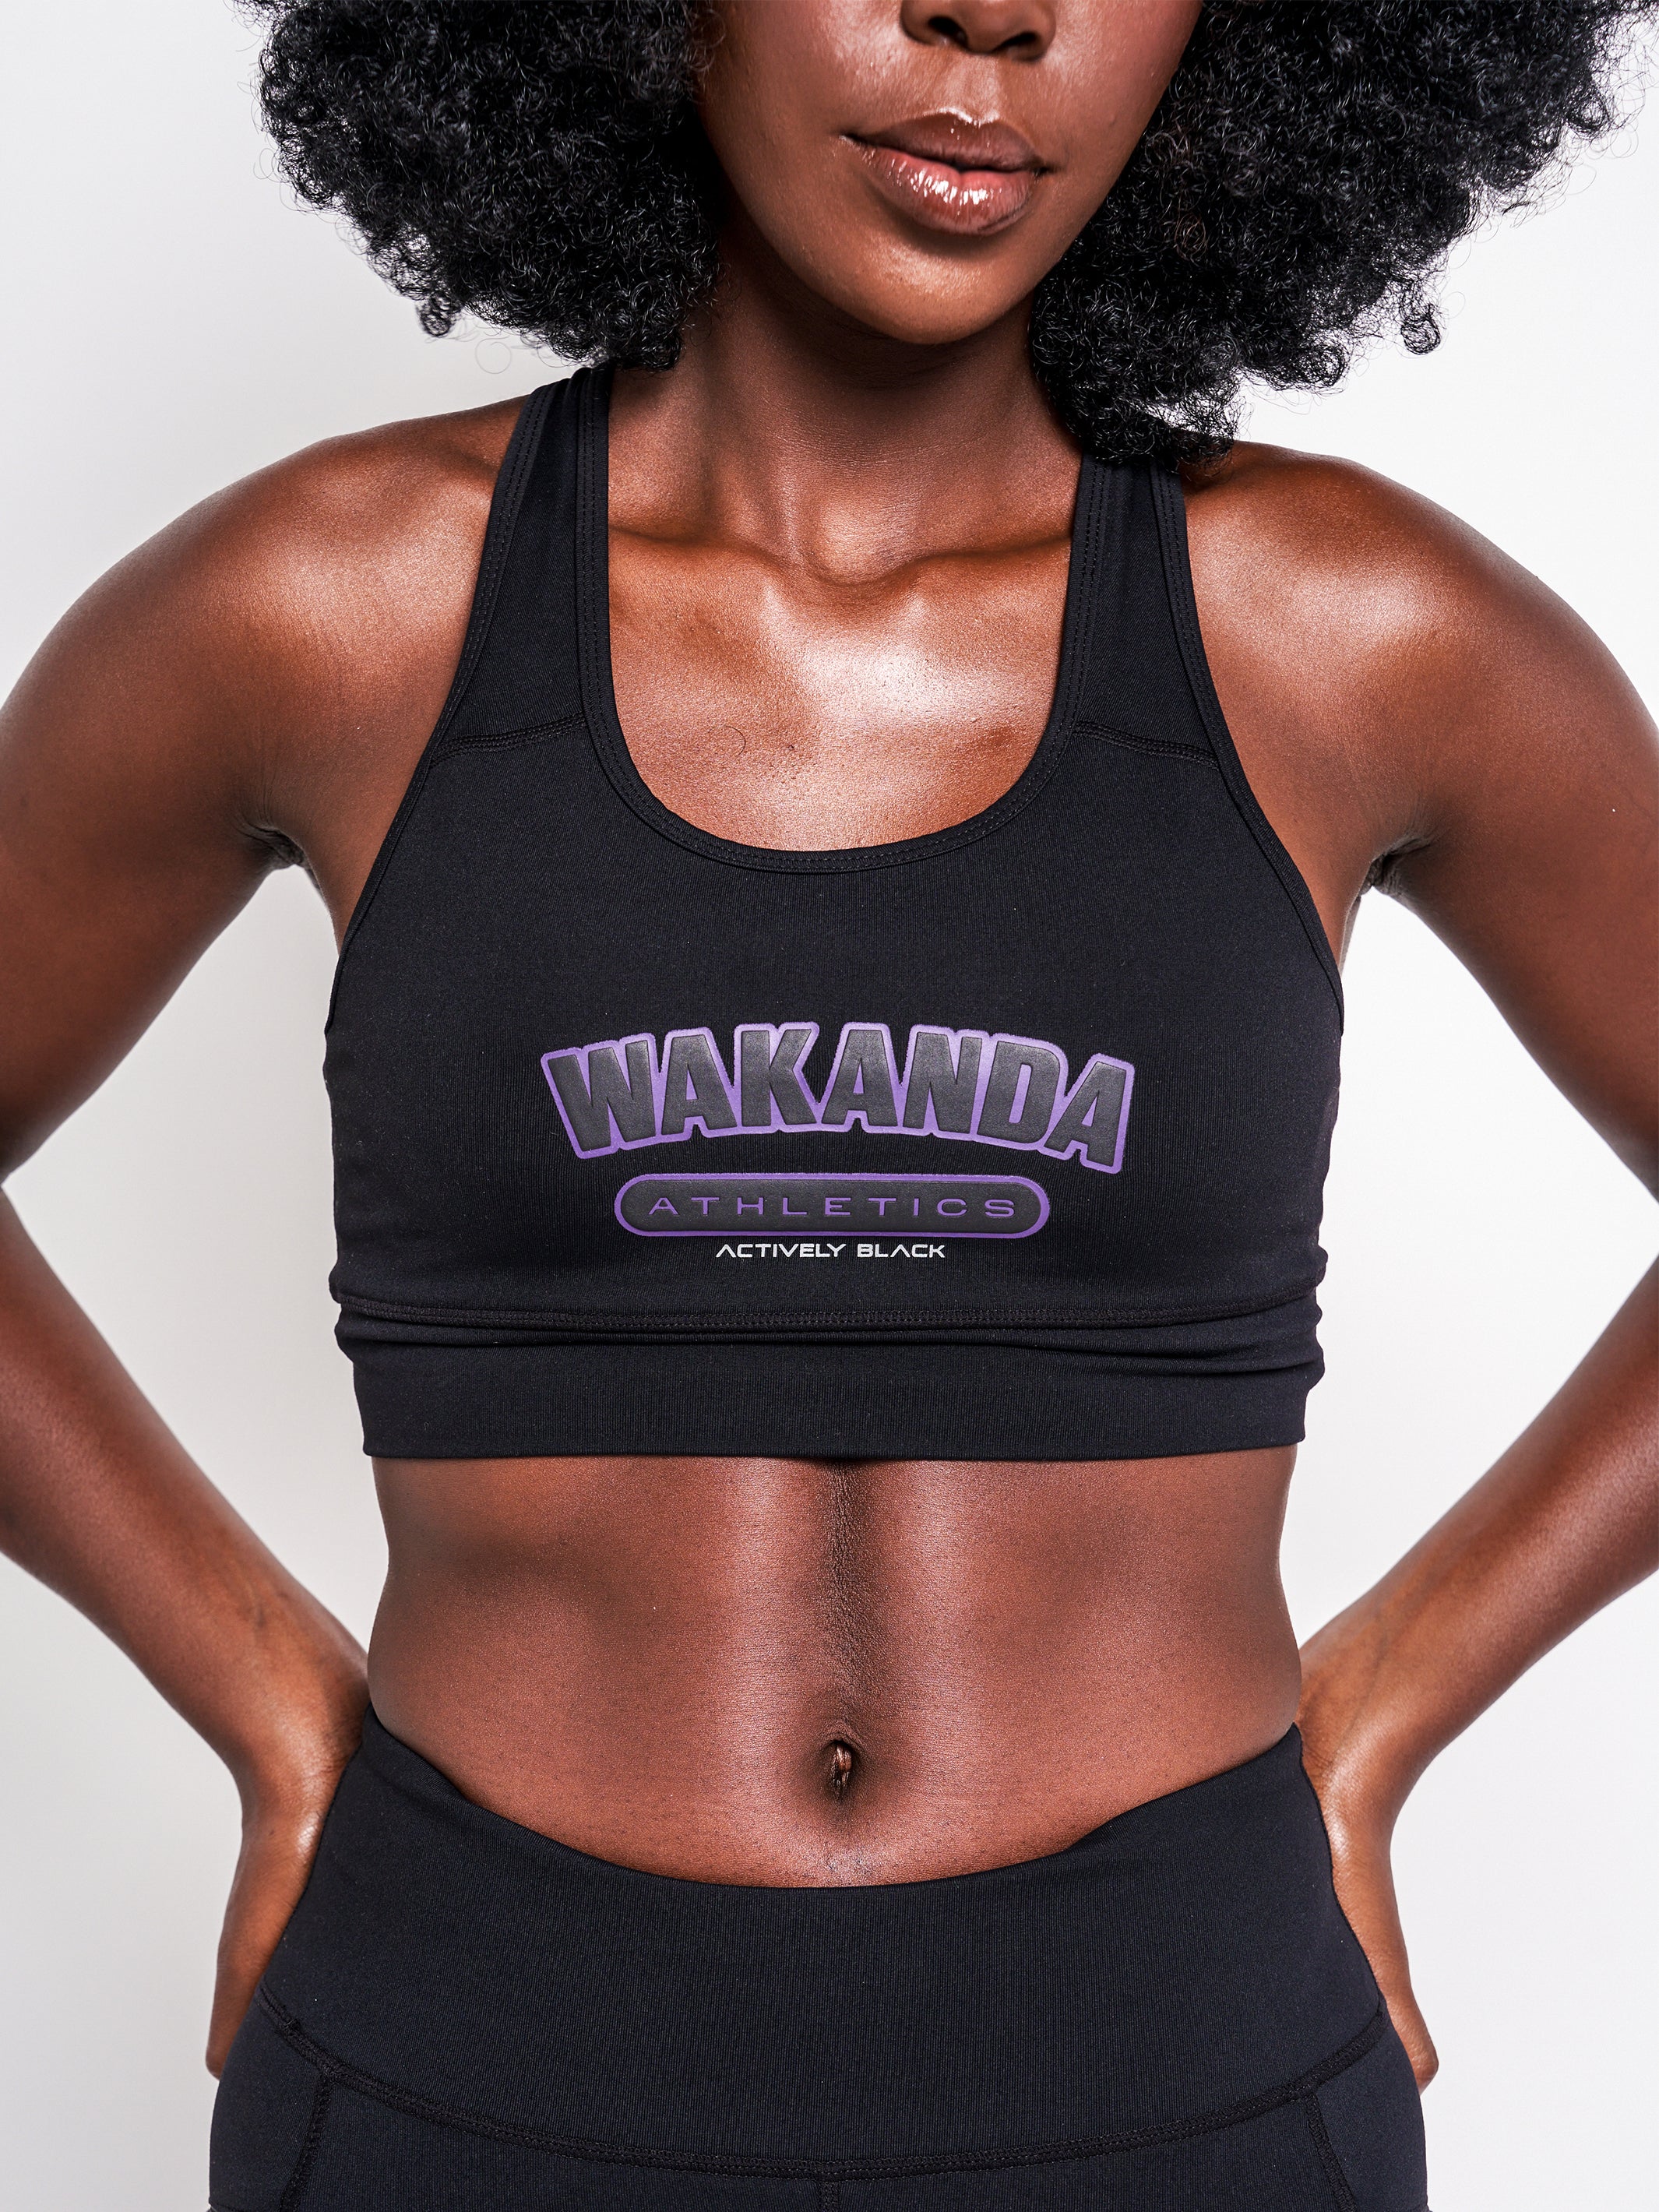 Women's Wakanda Athletics Classic Sports Bra